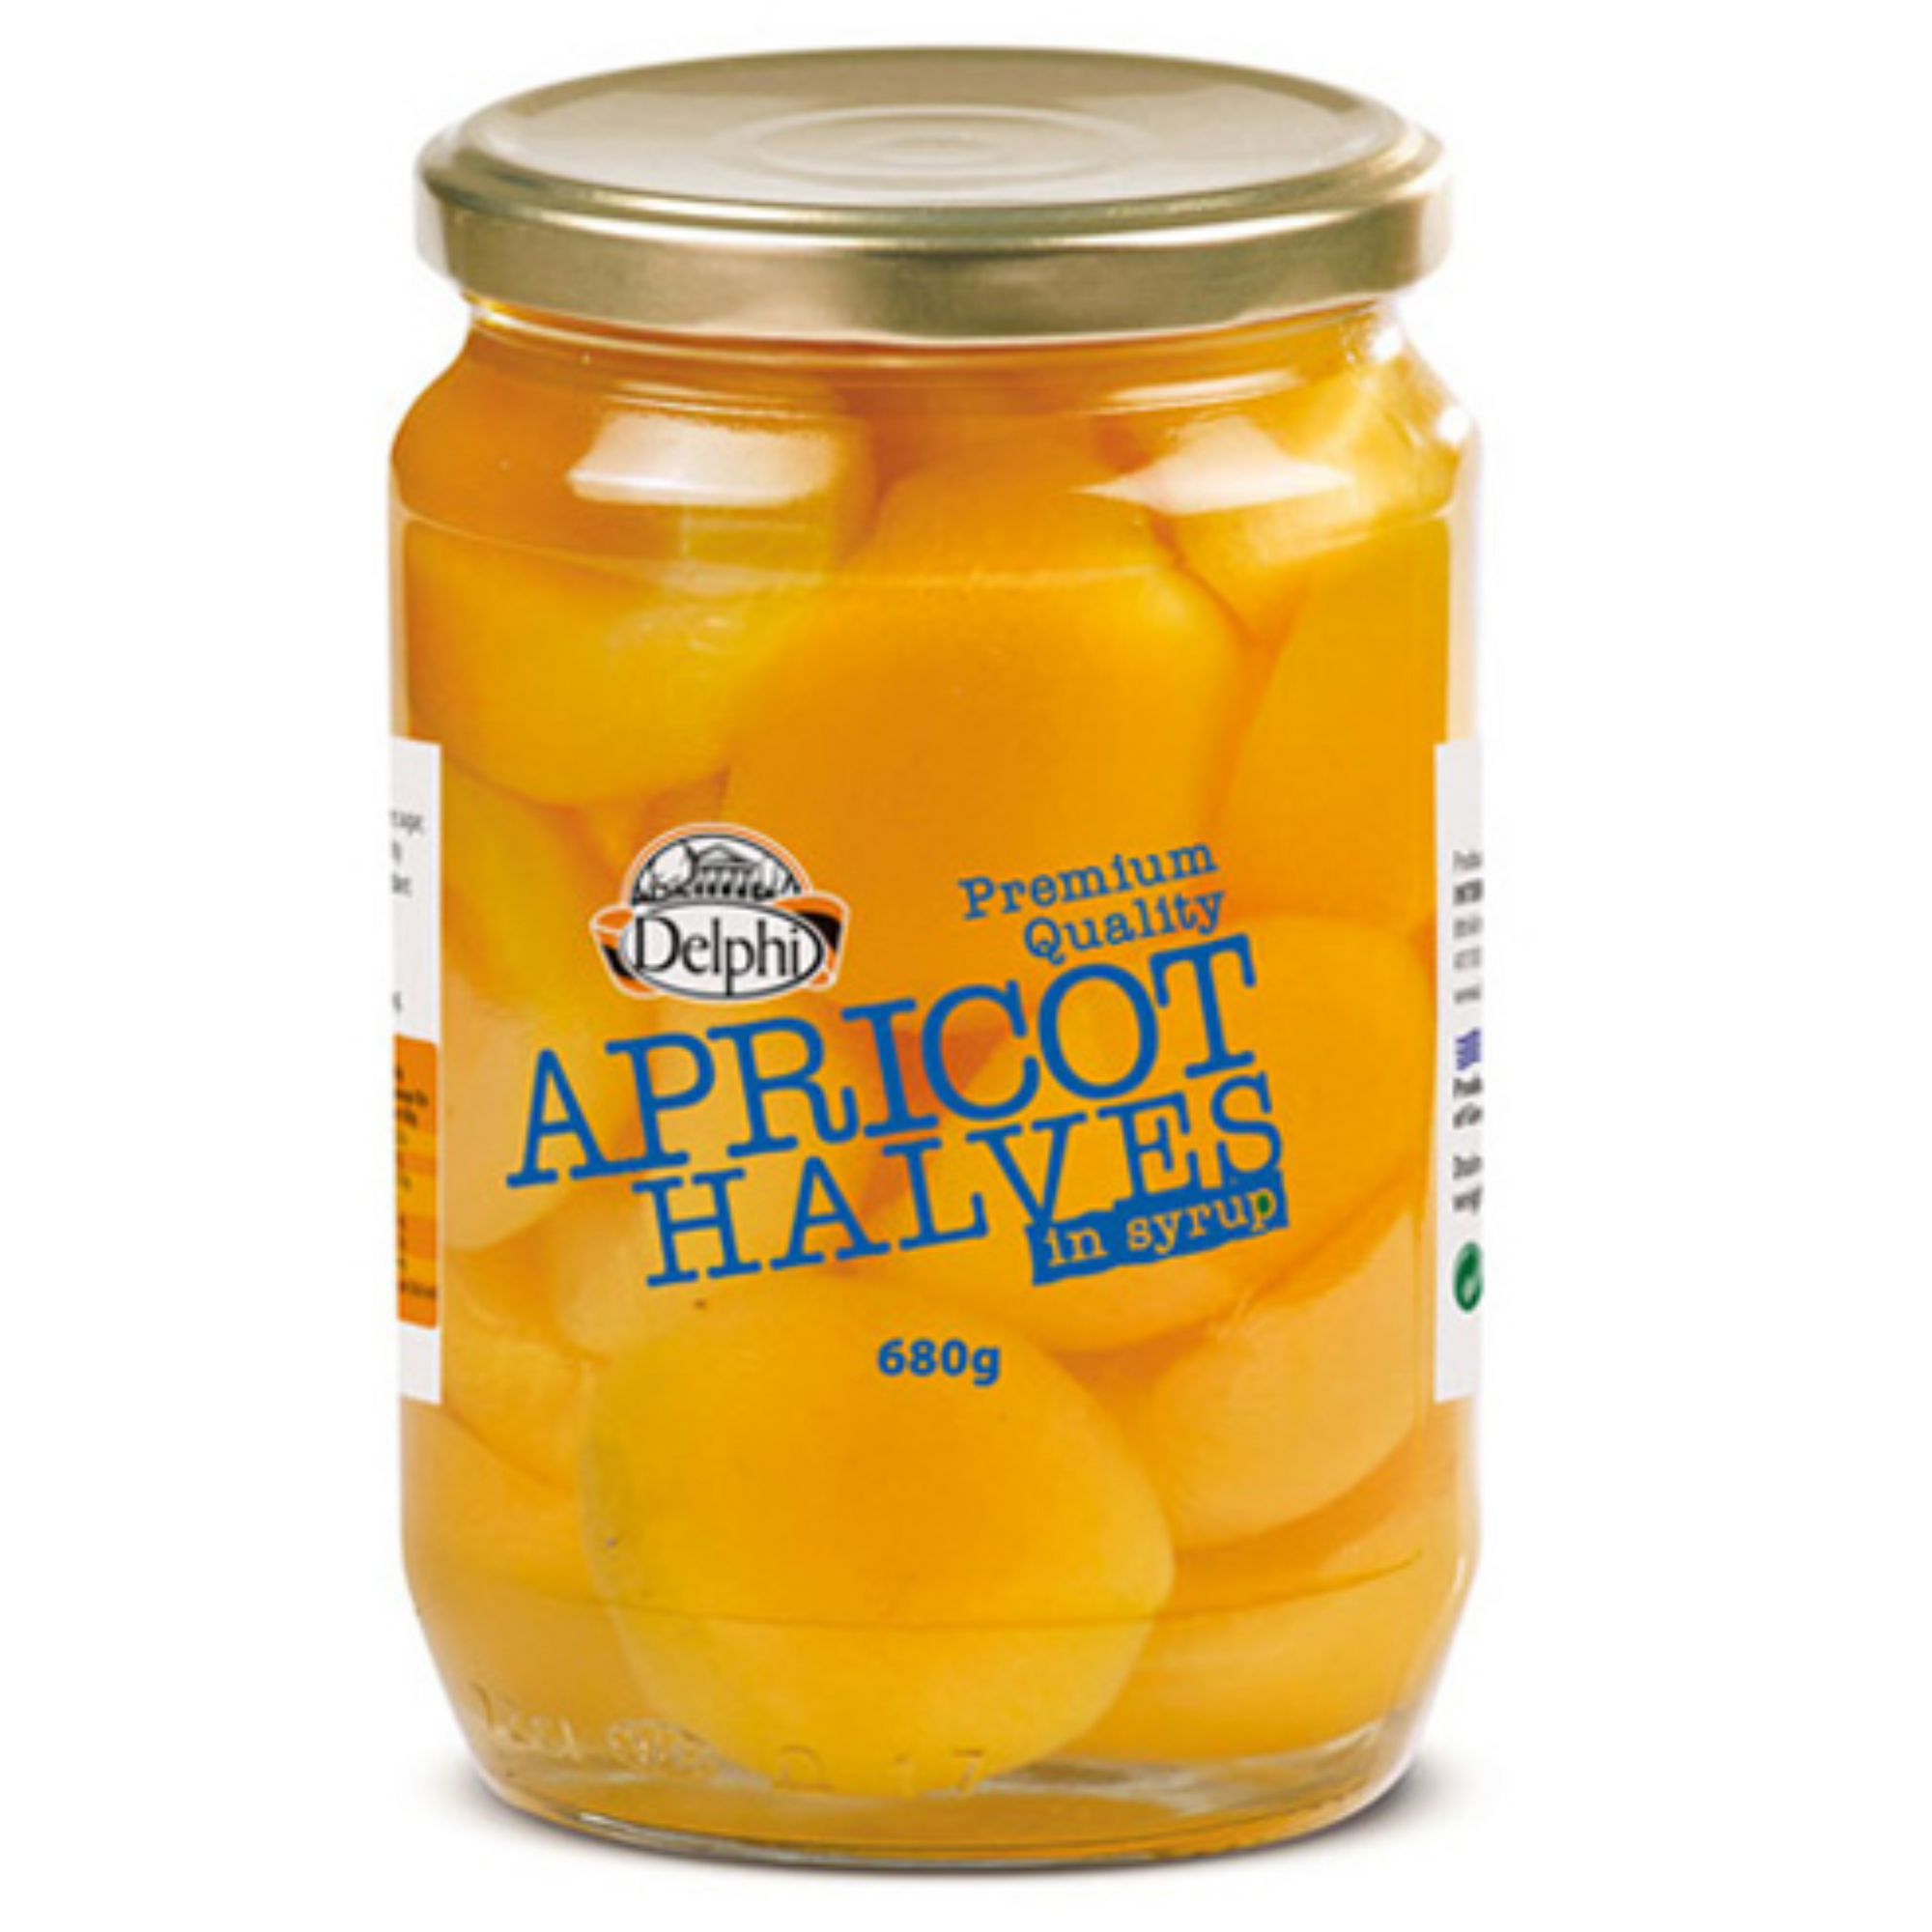 Greek Apricot Halves in light syrup 680g